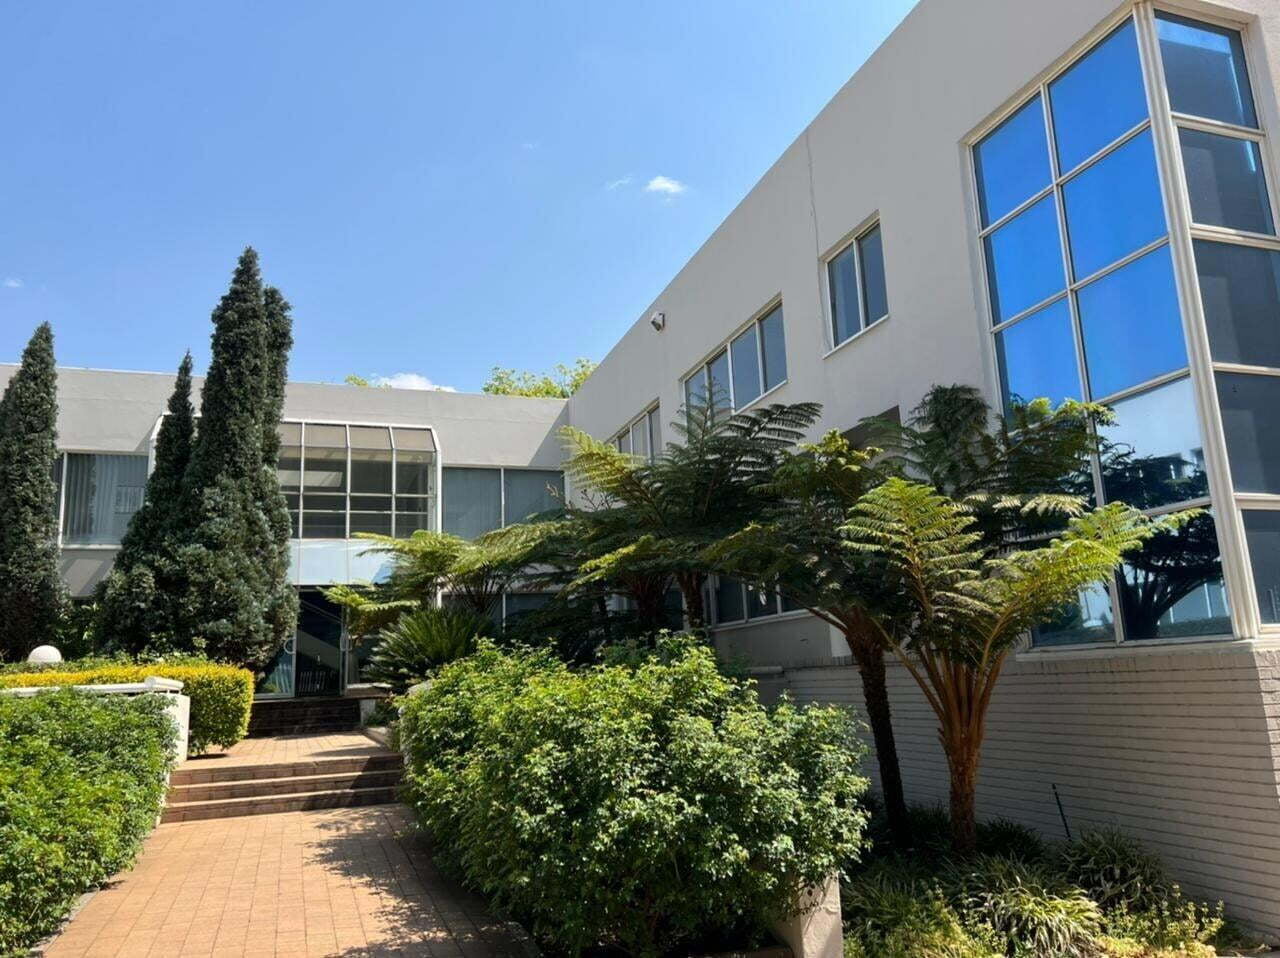 The Headache Clinic in Parktown, Johannesburg.